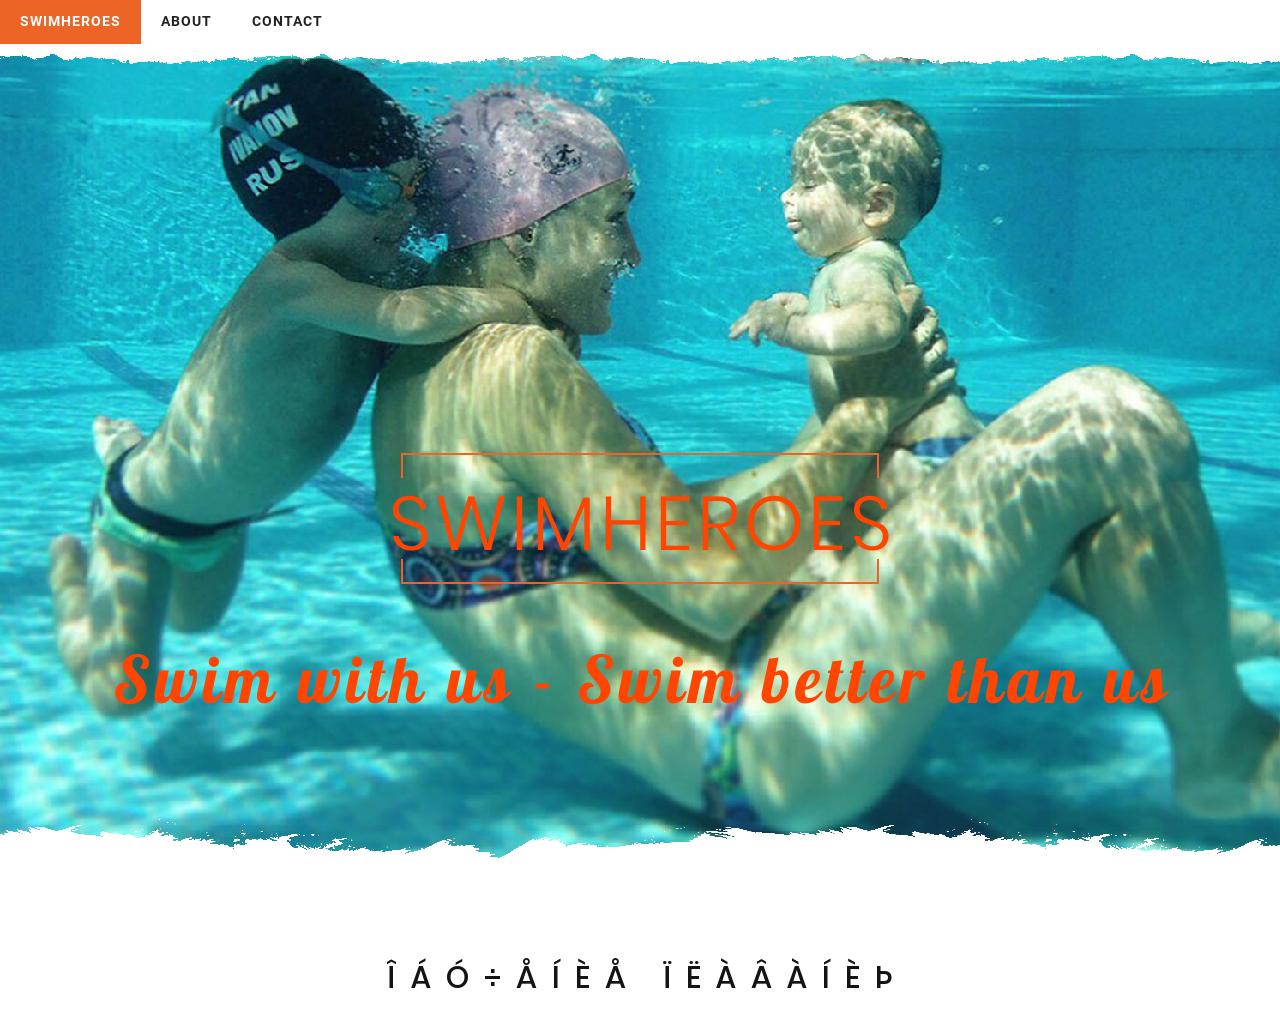 Изображение сайта swimheroes.ru в разрешении 1280x1024